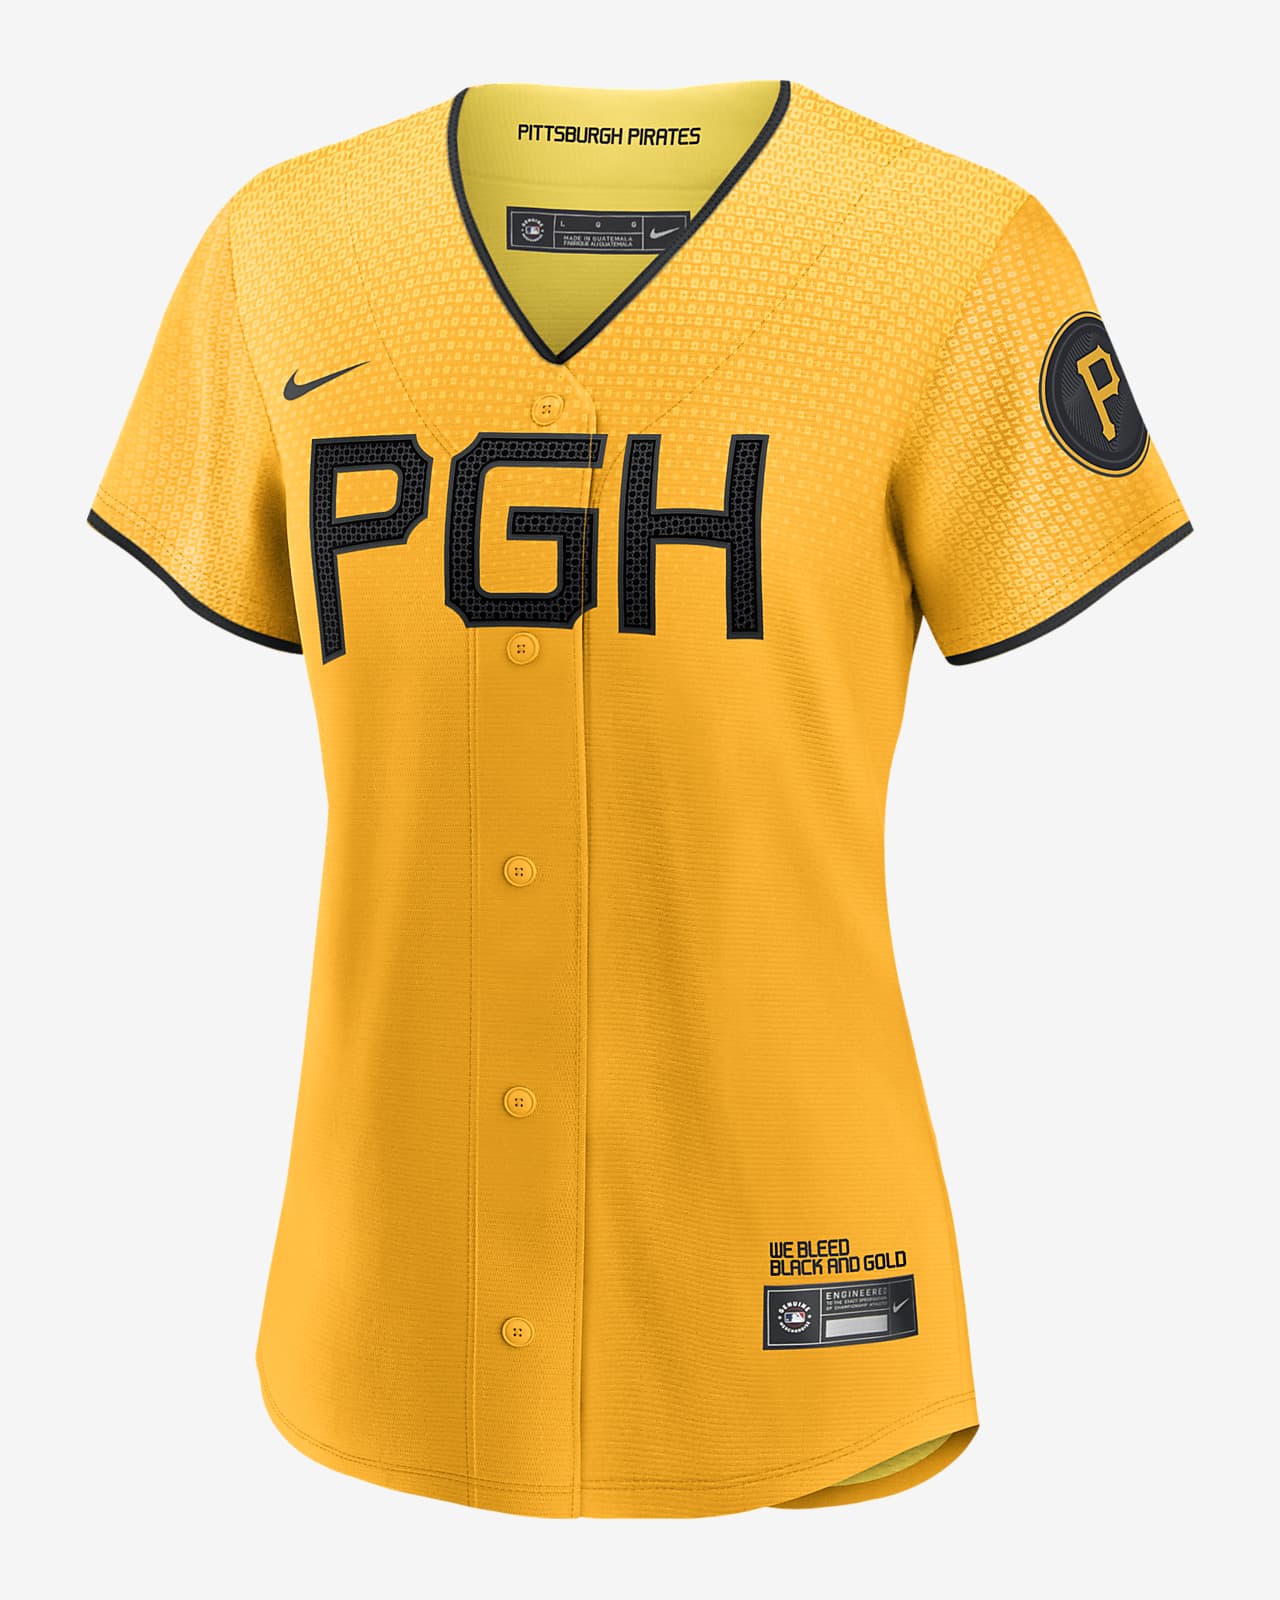 MLB Pittsburgh Pirates City Connect (Roberto Clemente) Women's Replica Baseball Jersey